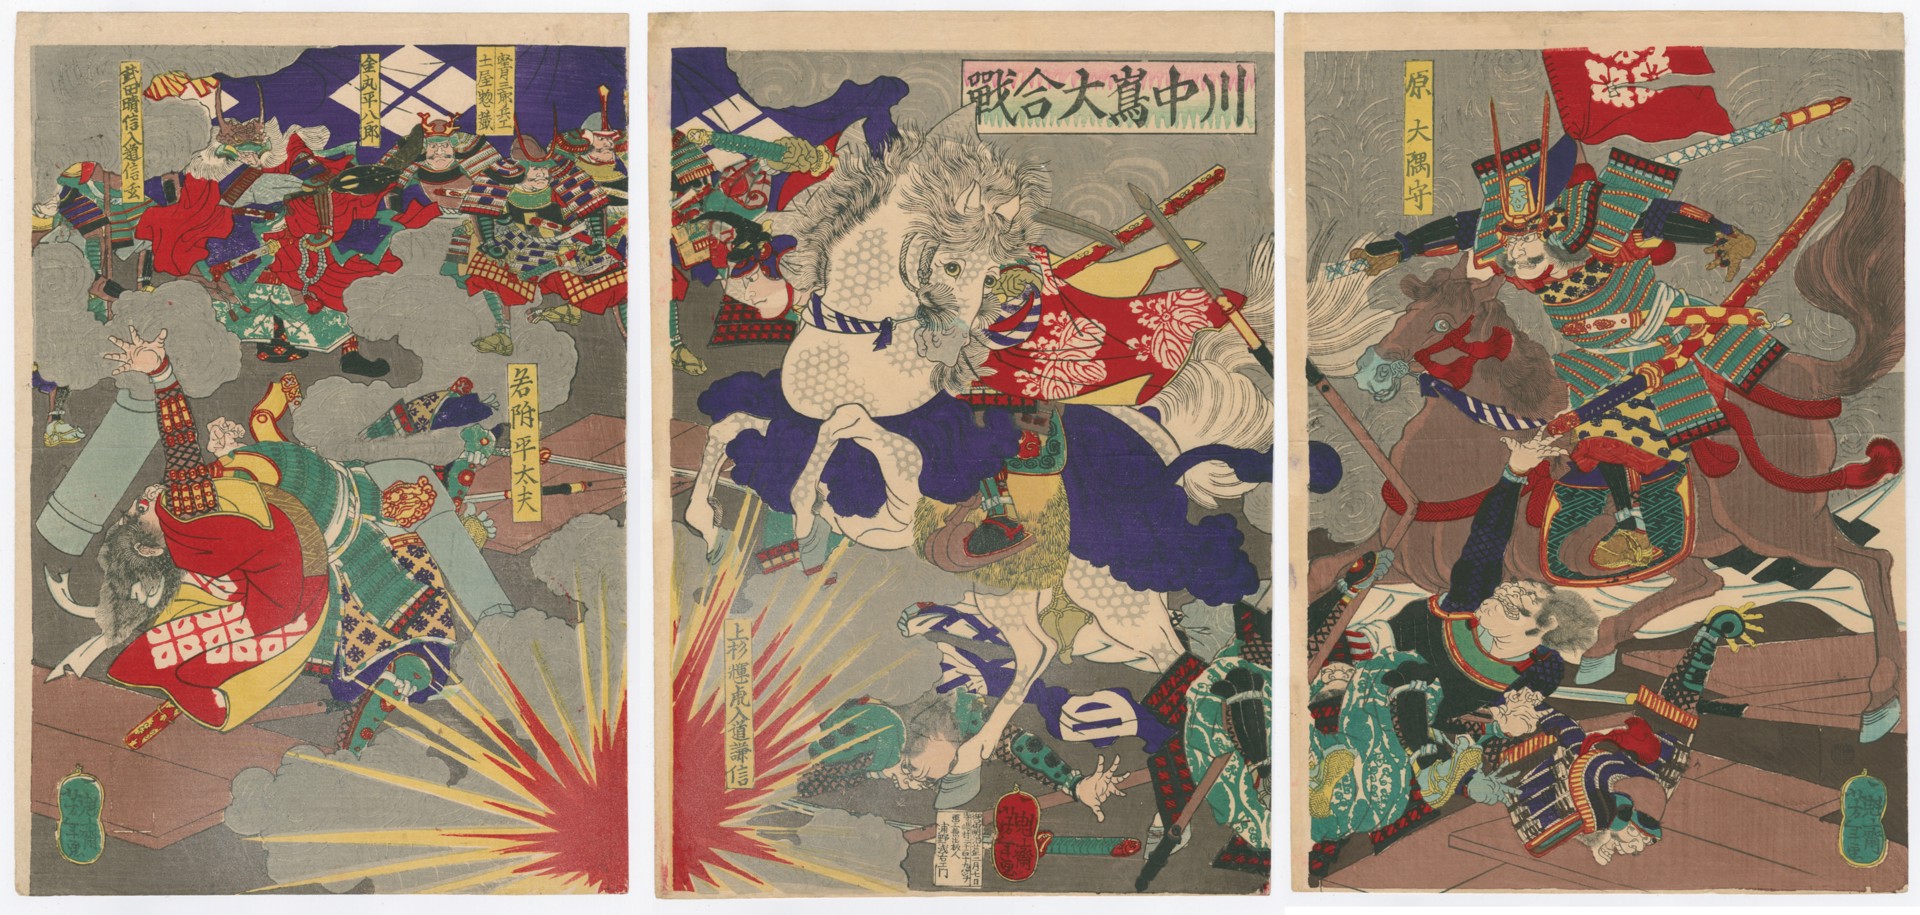 Battle of Kawanakajima by Yoshitoshi